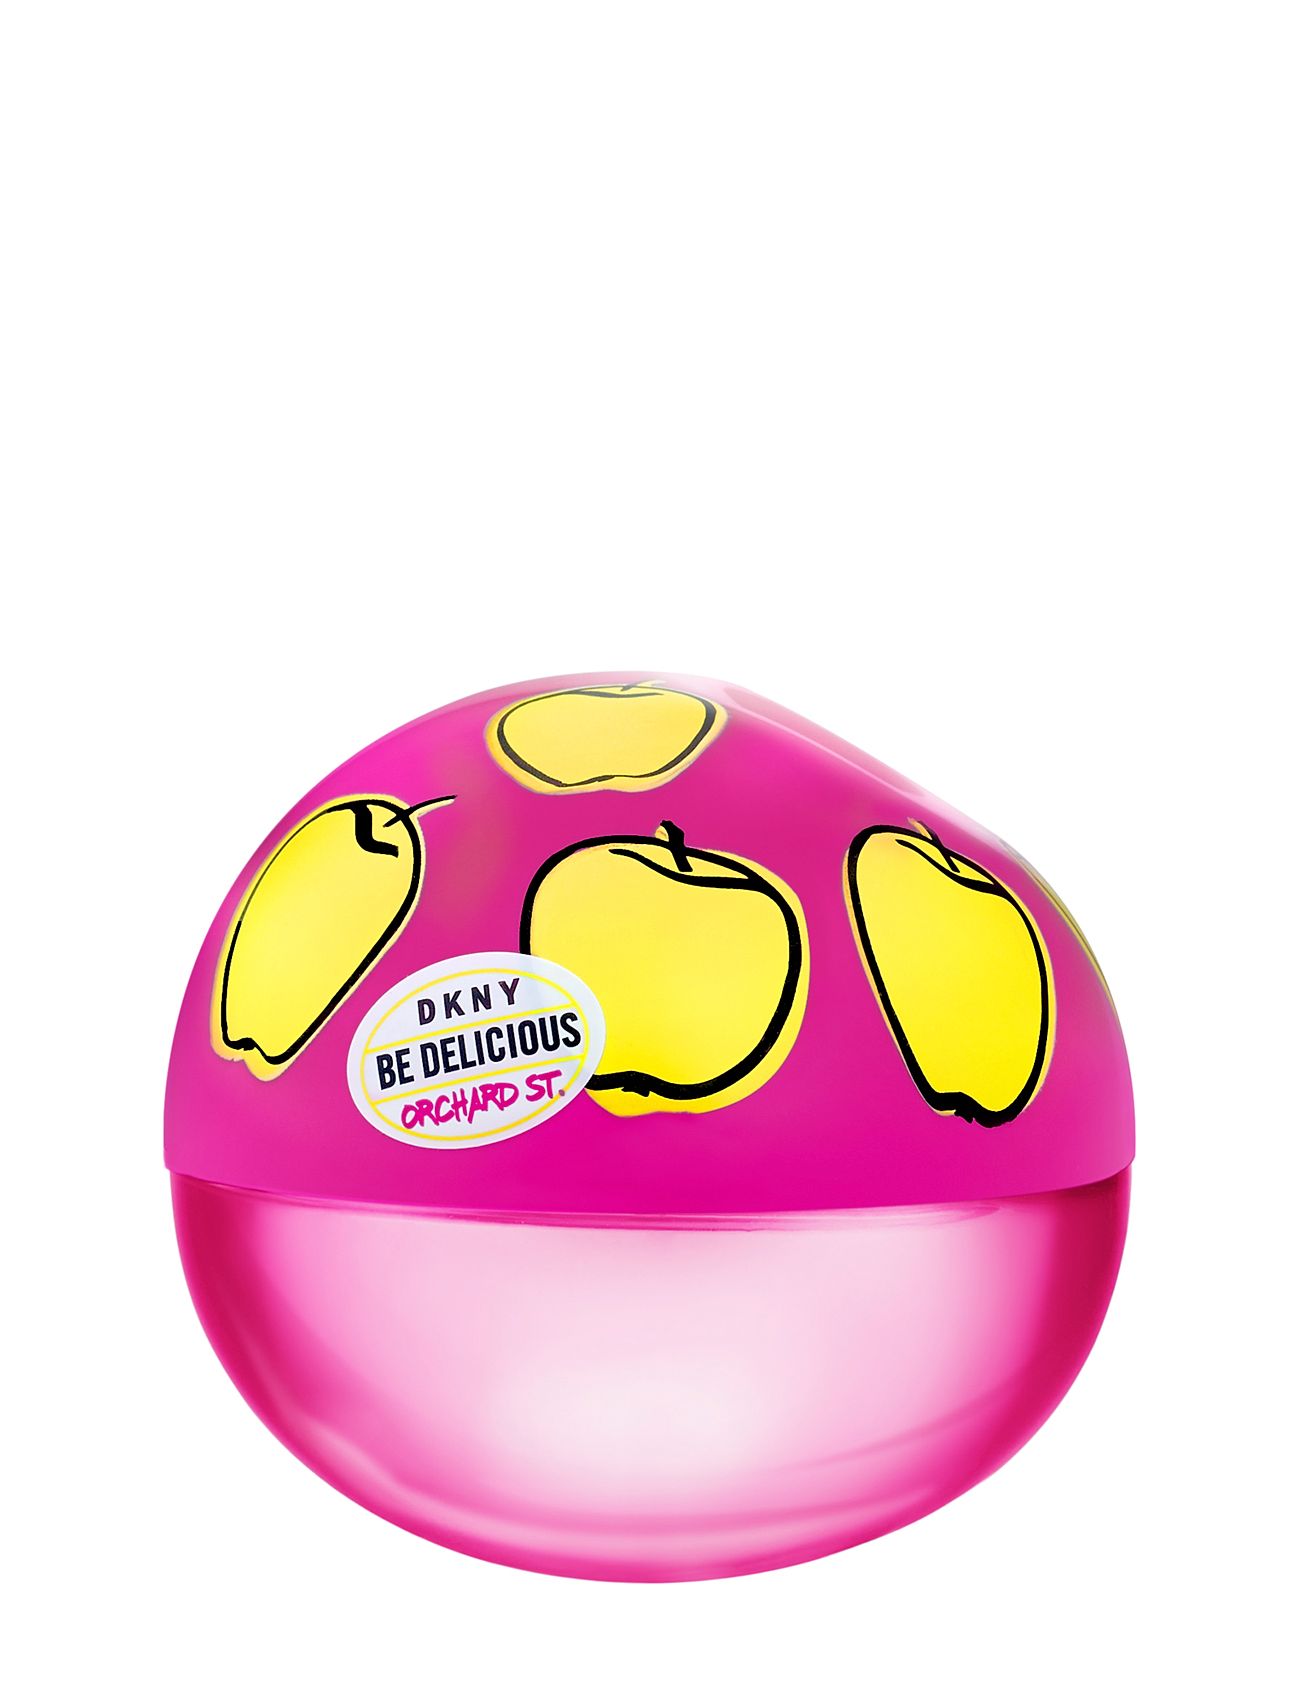 Donna Karan Be Delicious Orchard St. Eau De Parfum 30 Ml Parfym Eau De Parfum Nude Donna Karan/DKNY Fragrance